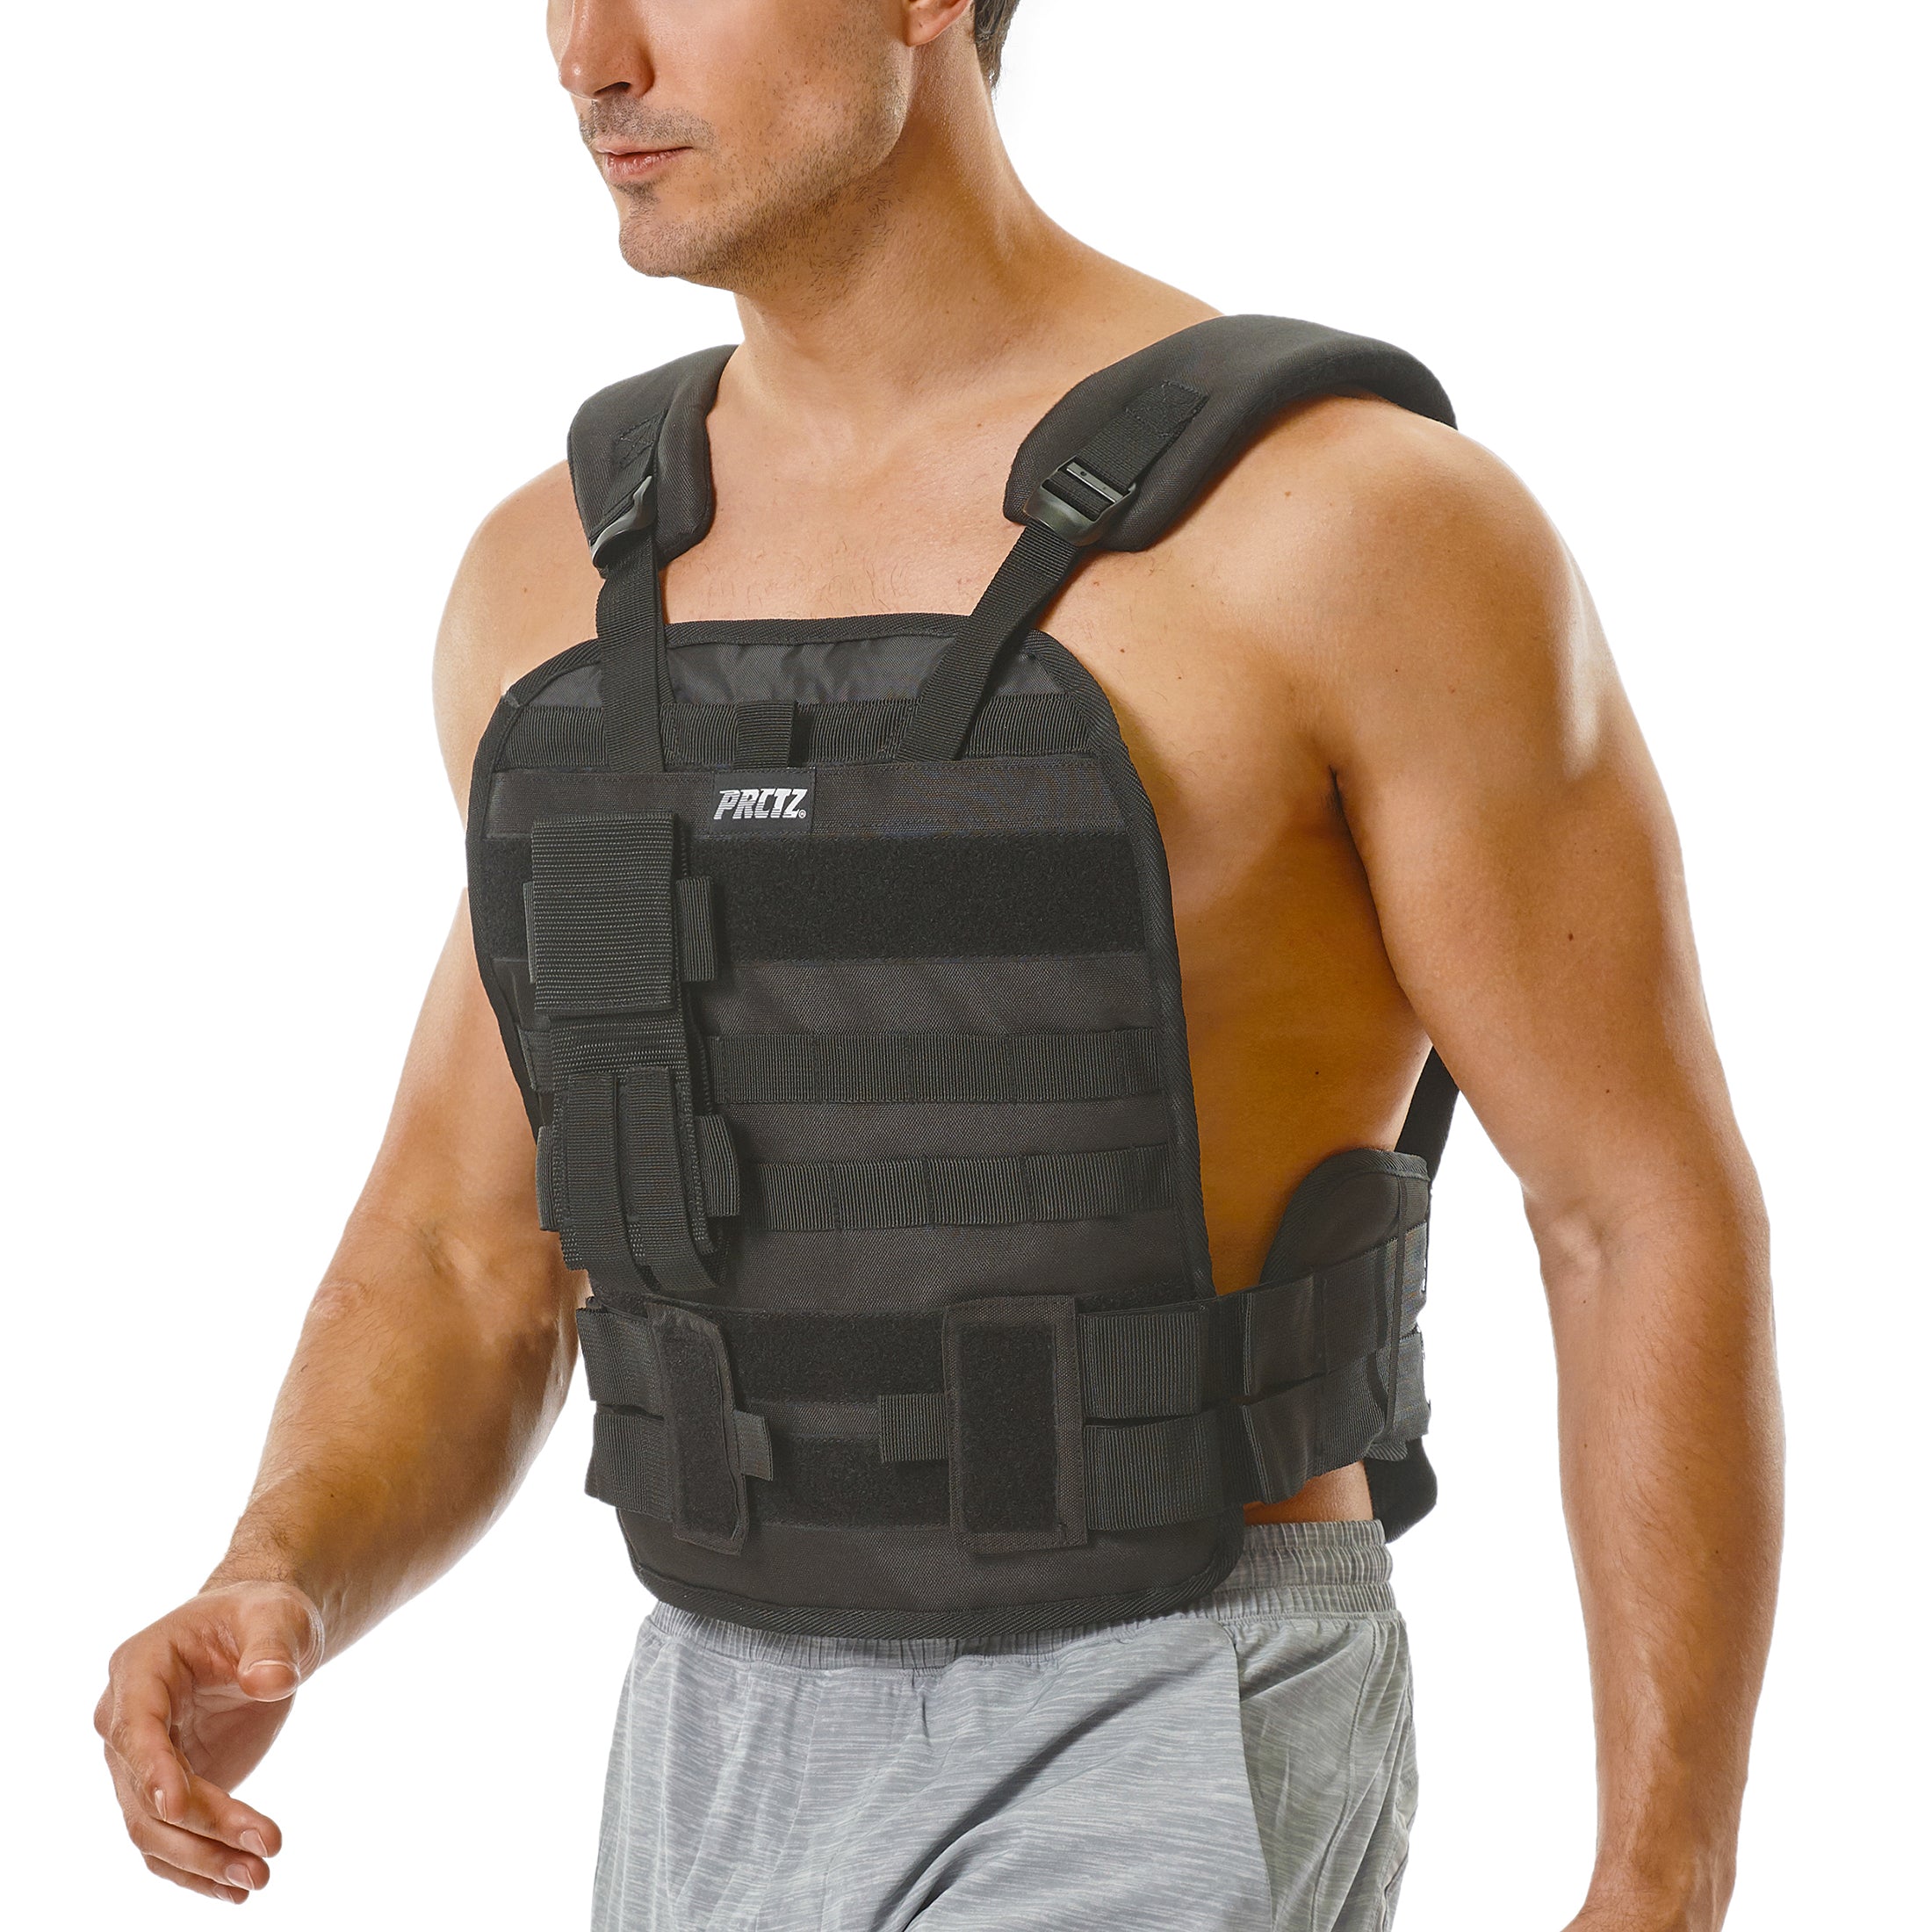 ZFOsports Adjustable Weighted Vest